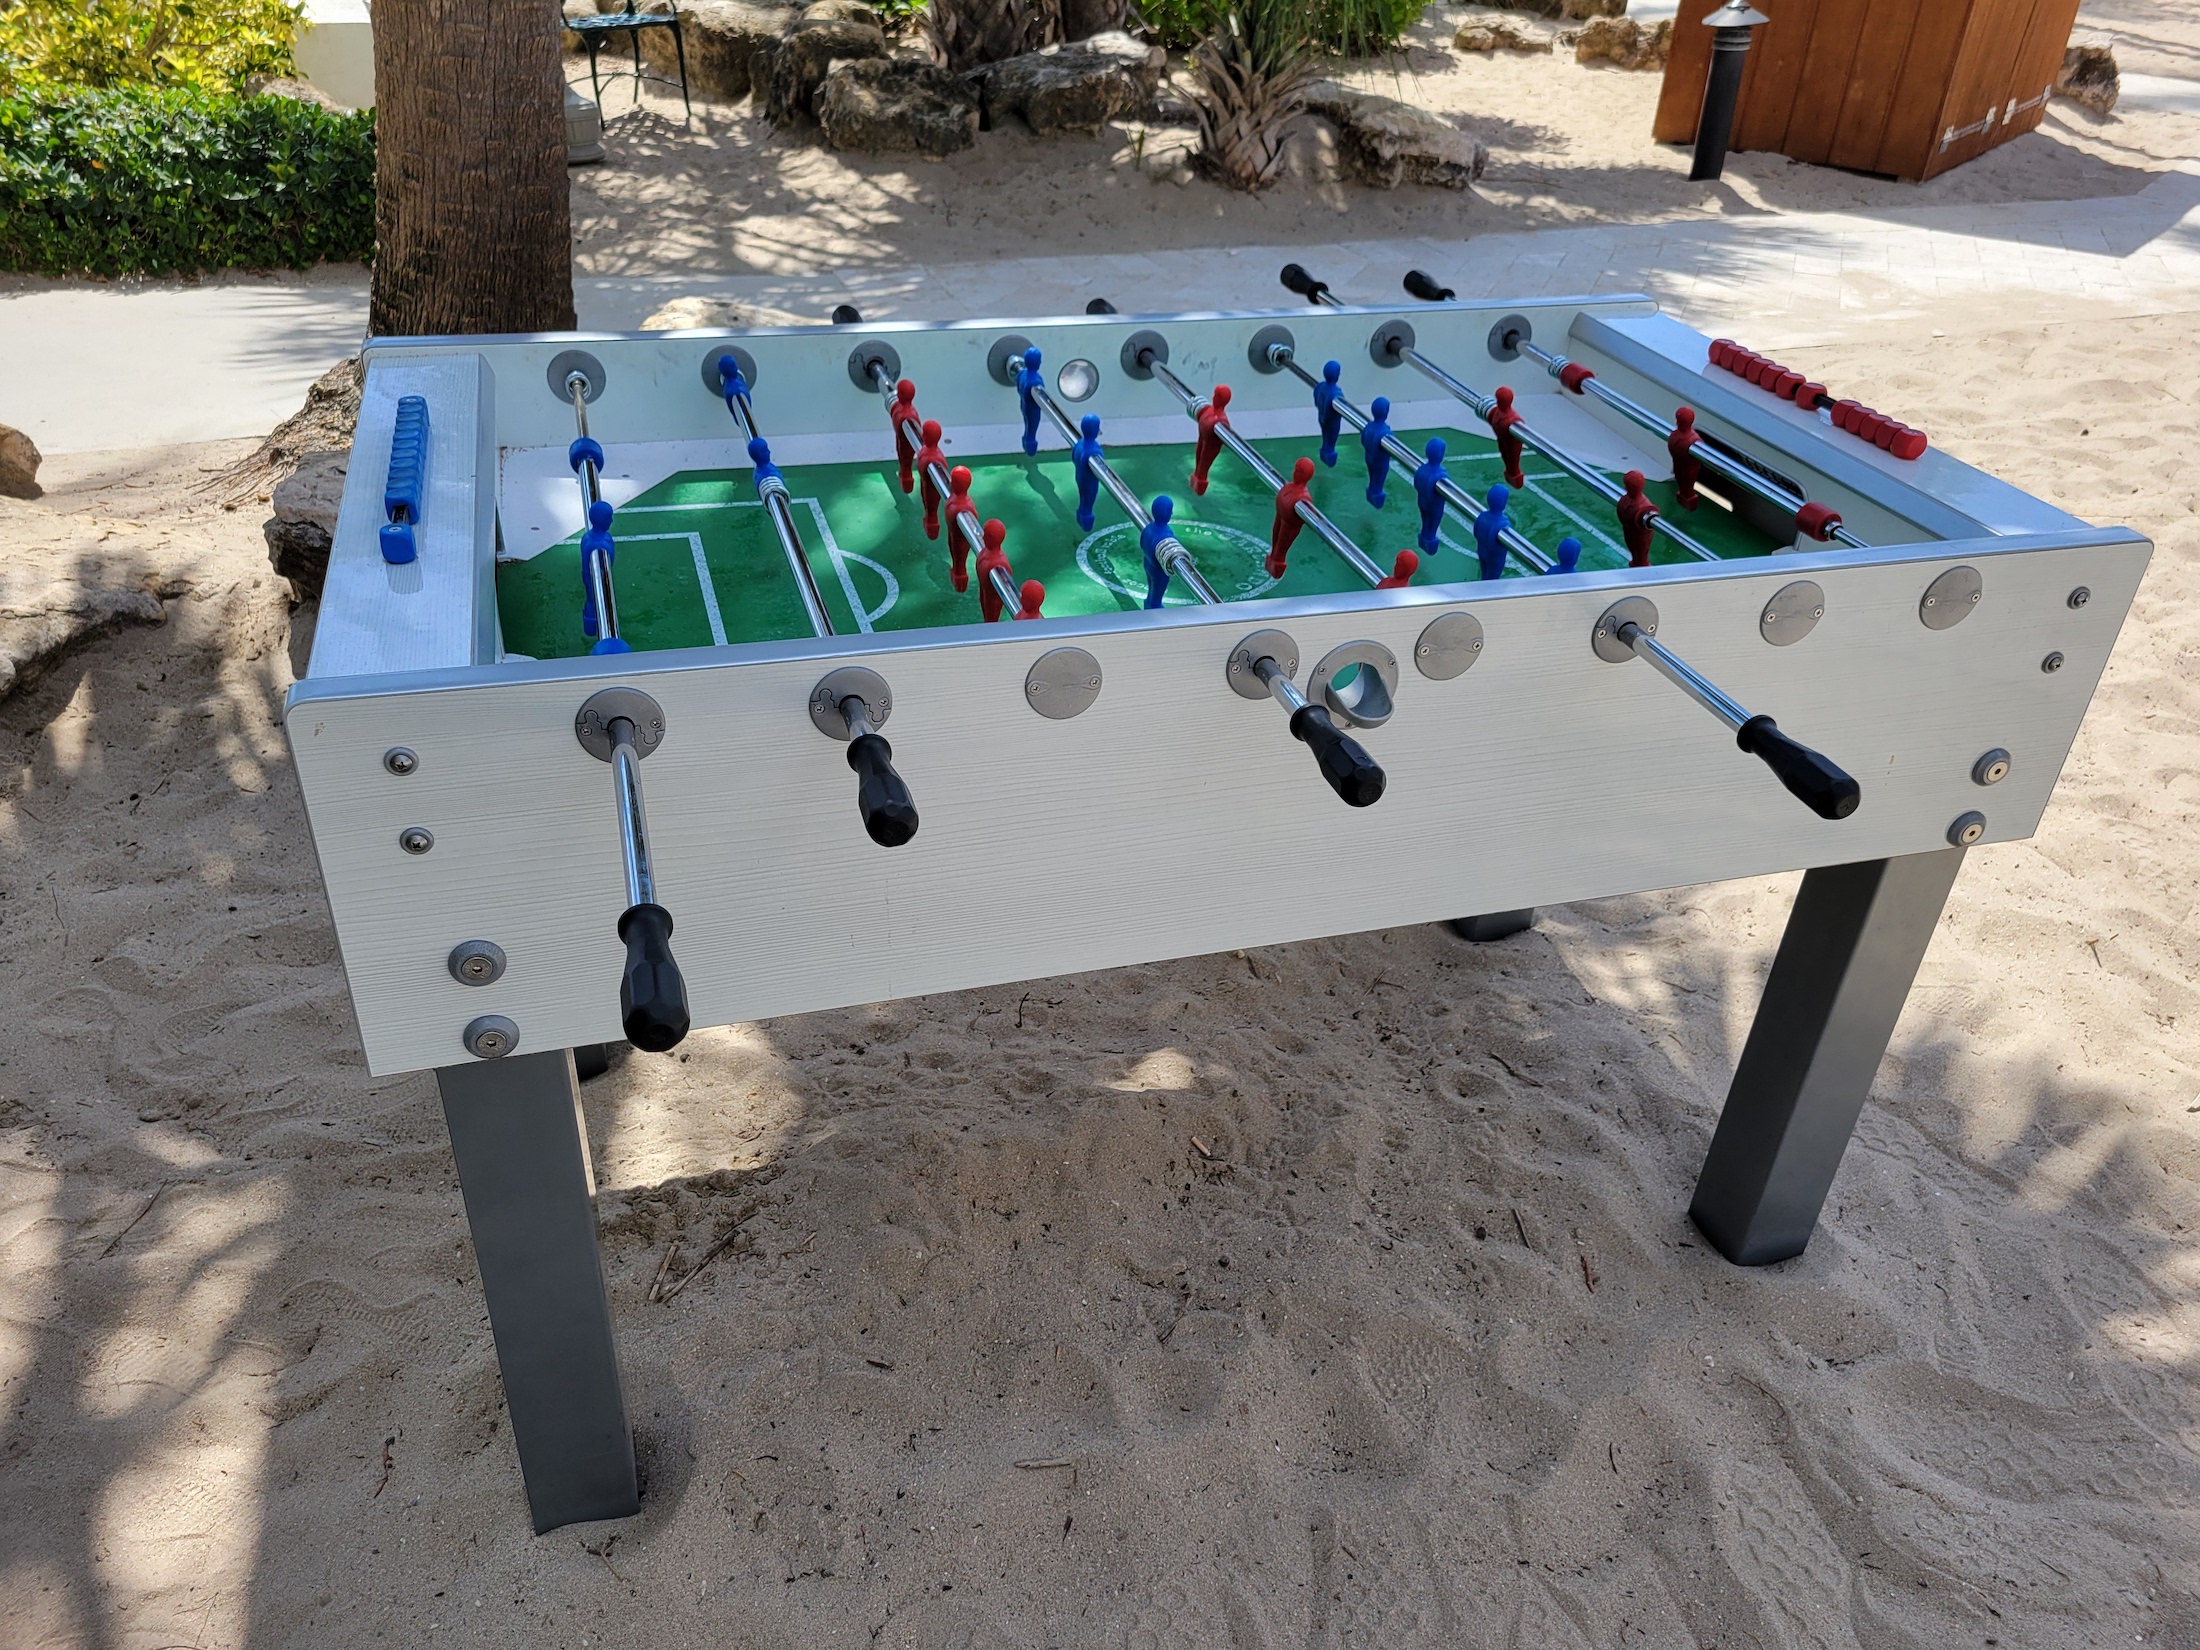 new foosball at lago mar resort beach play area